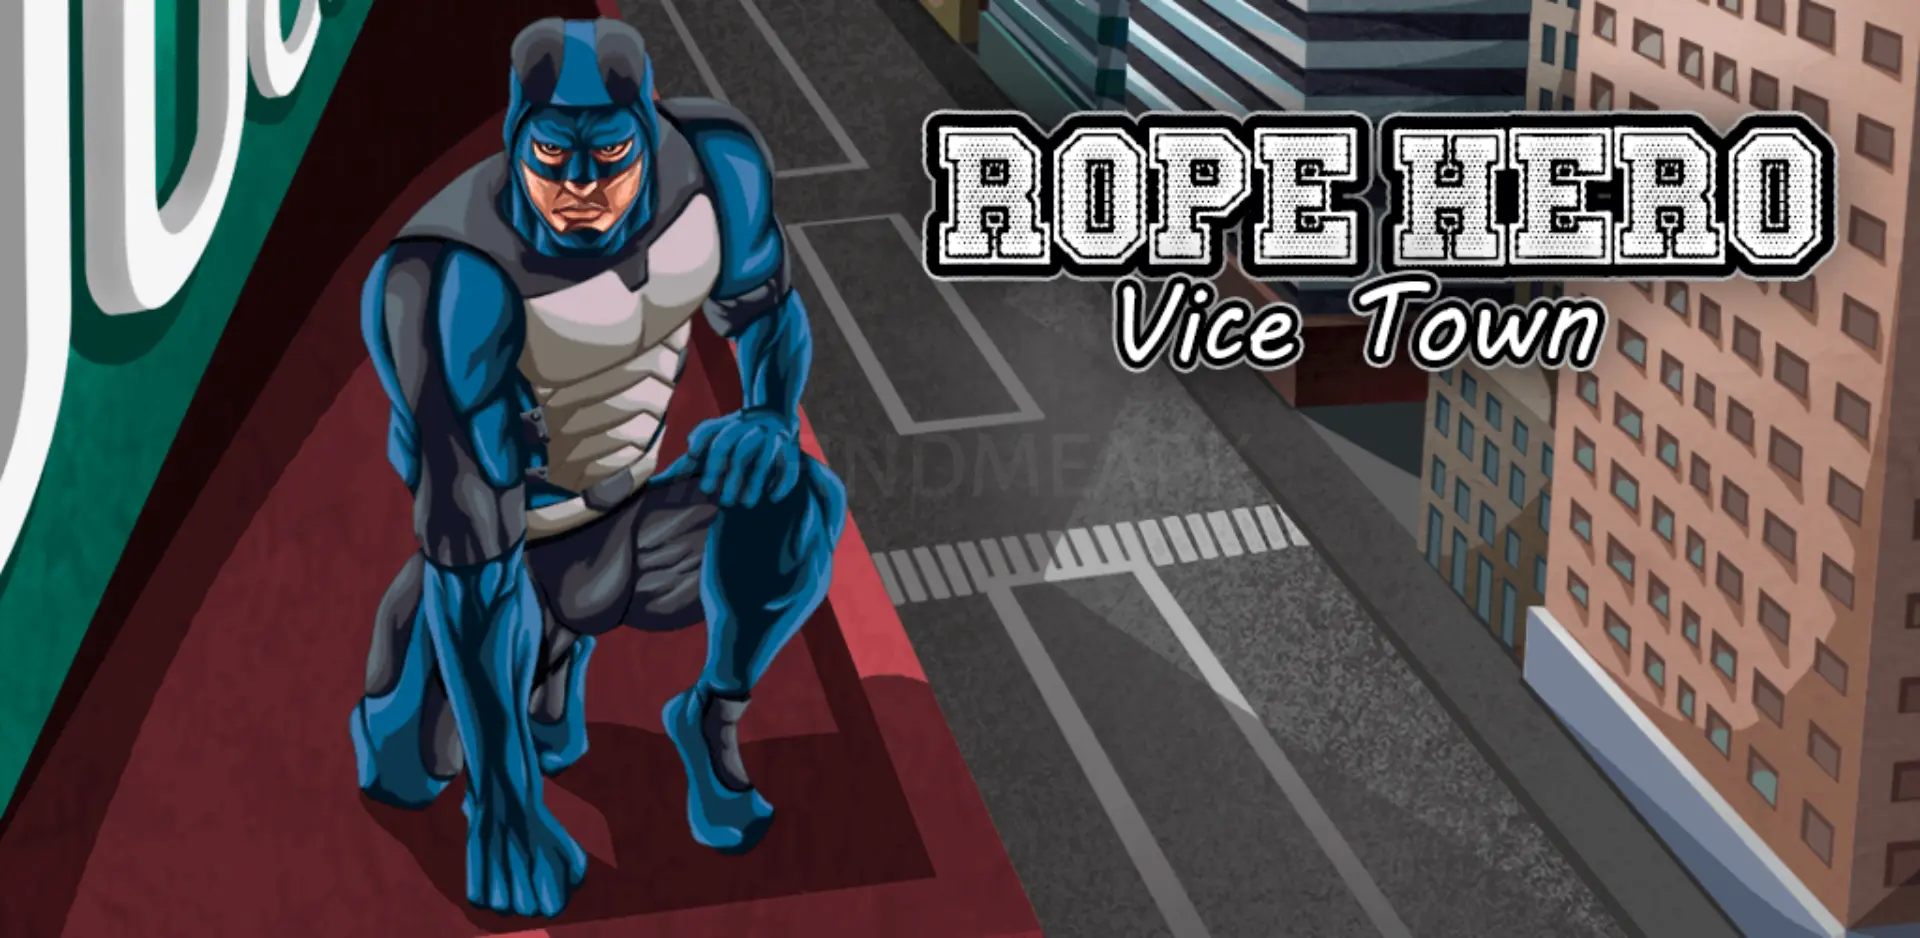 Rope hero vice town